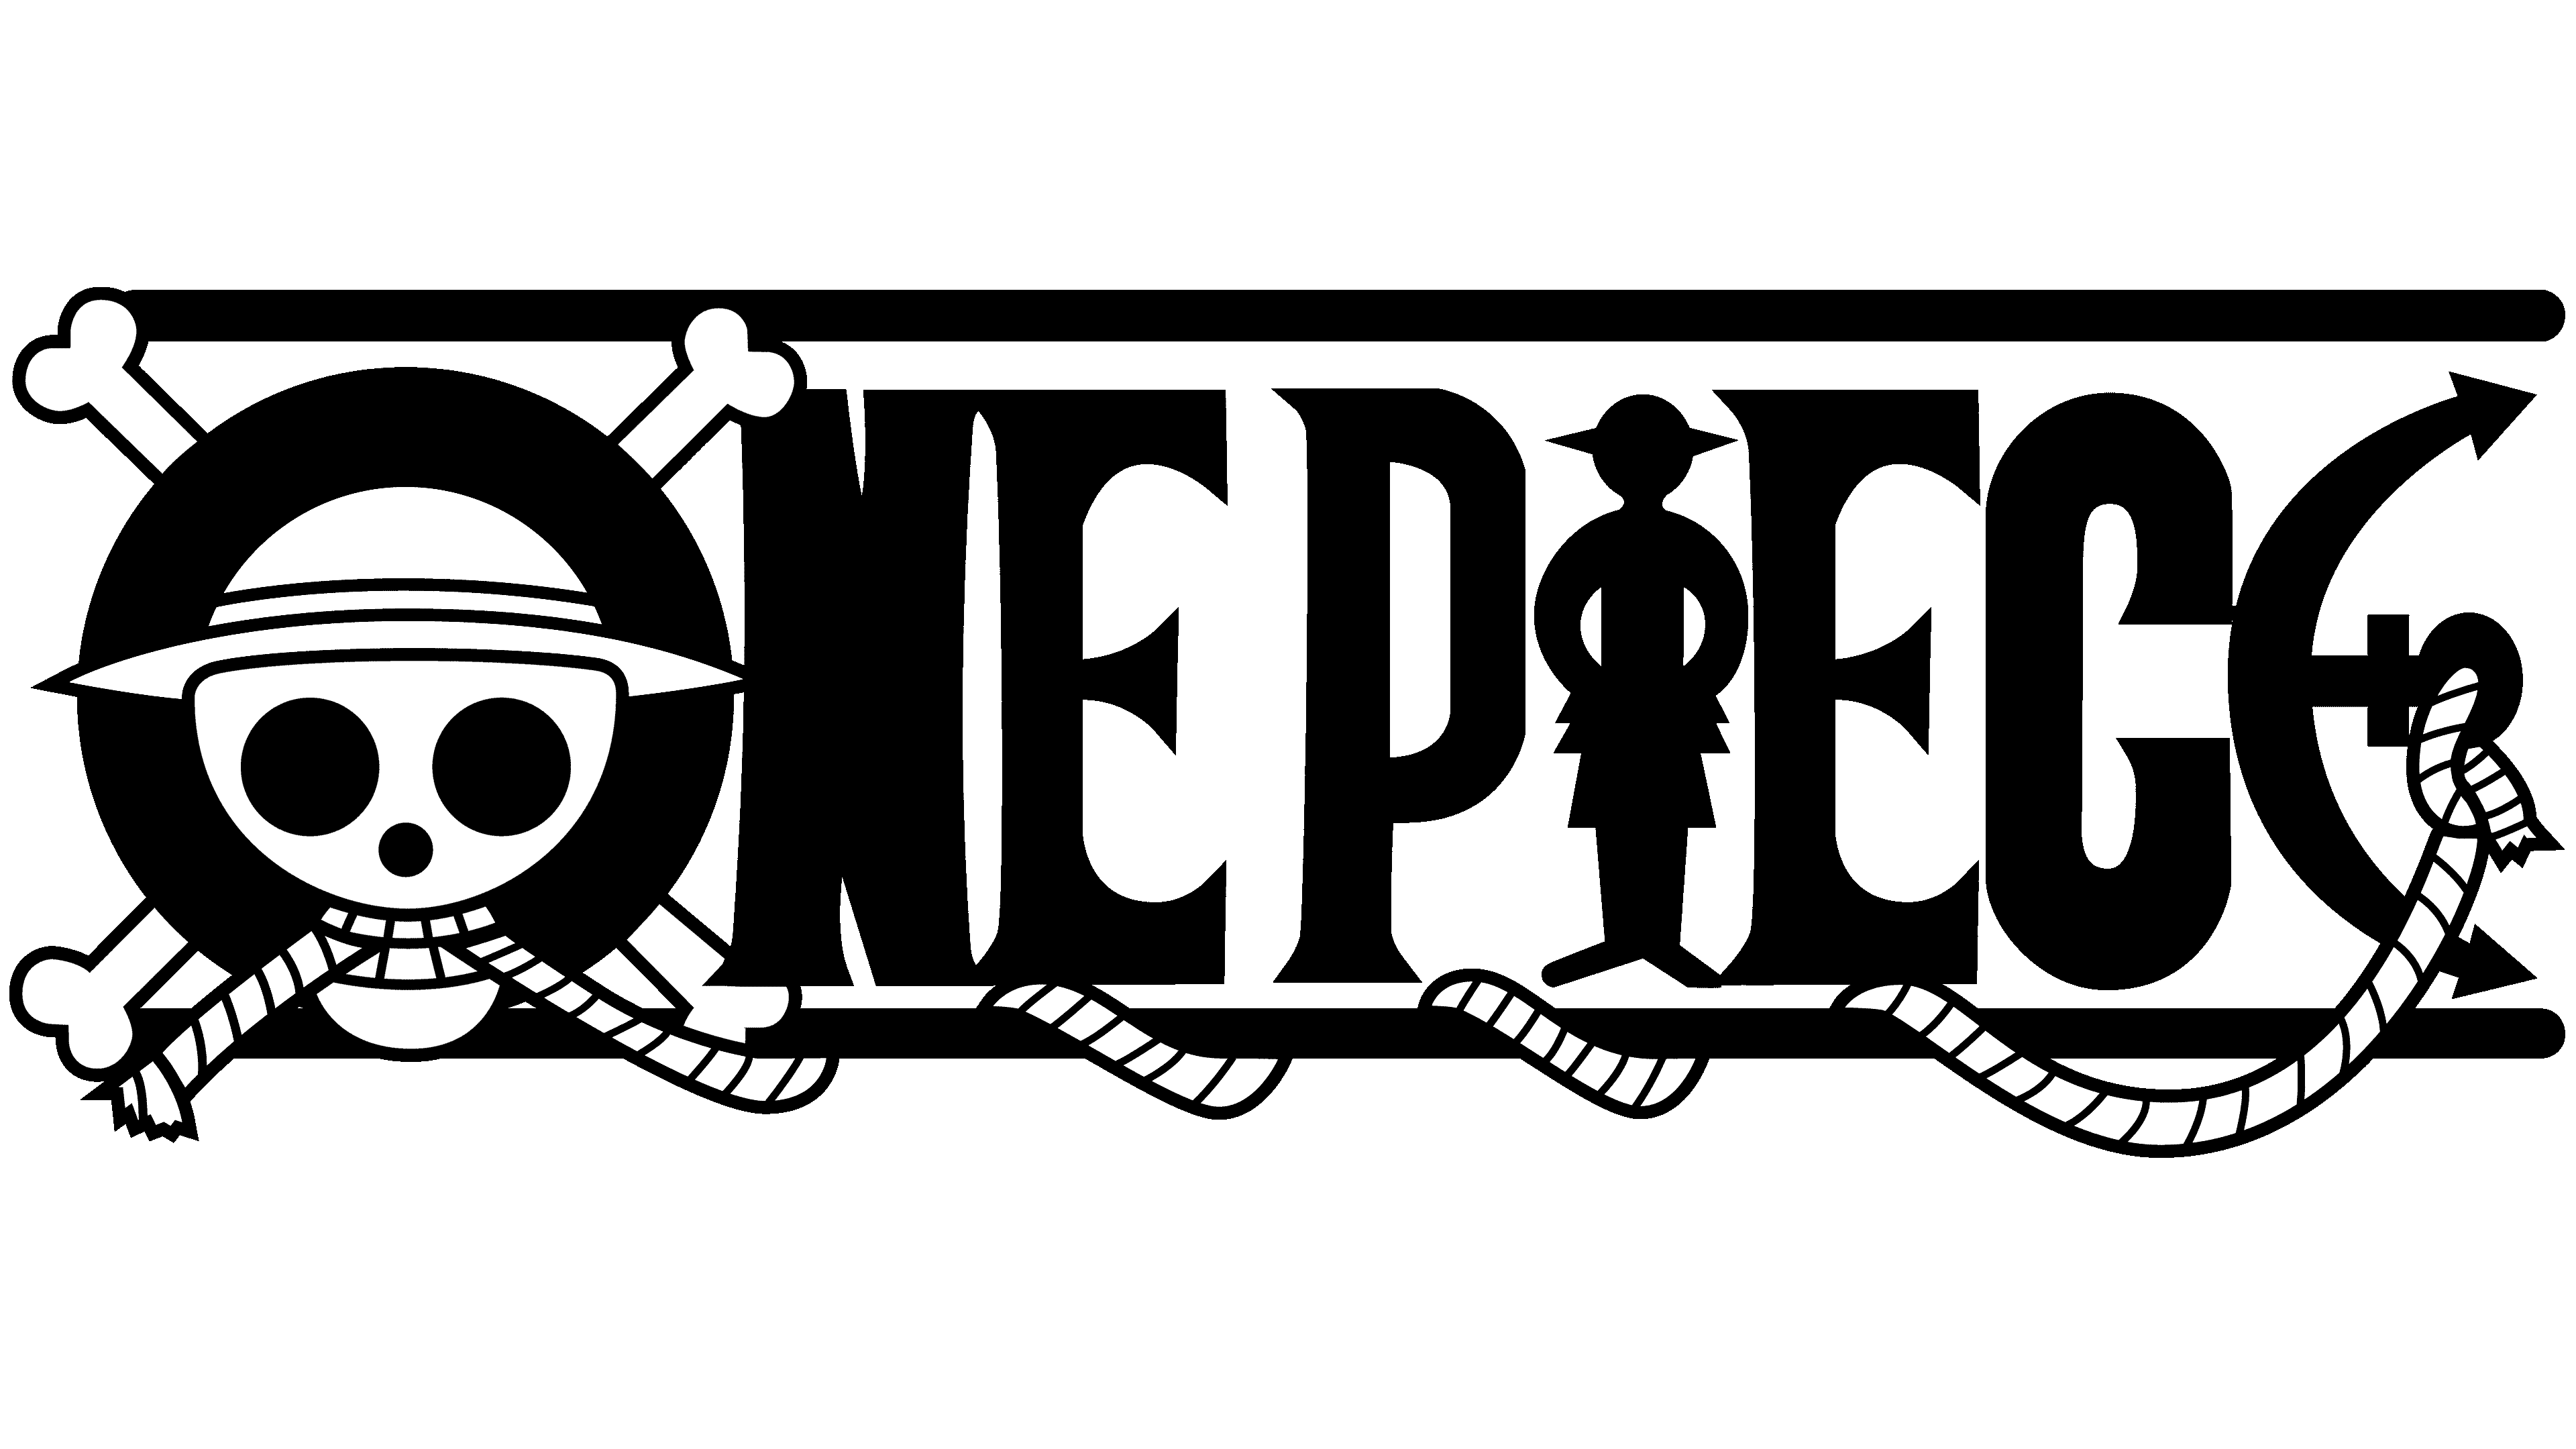 One Piece Symbol